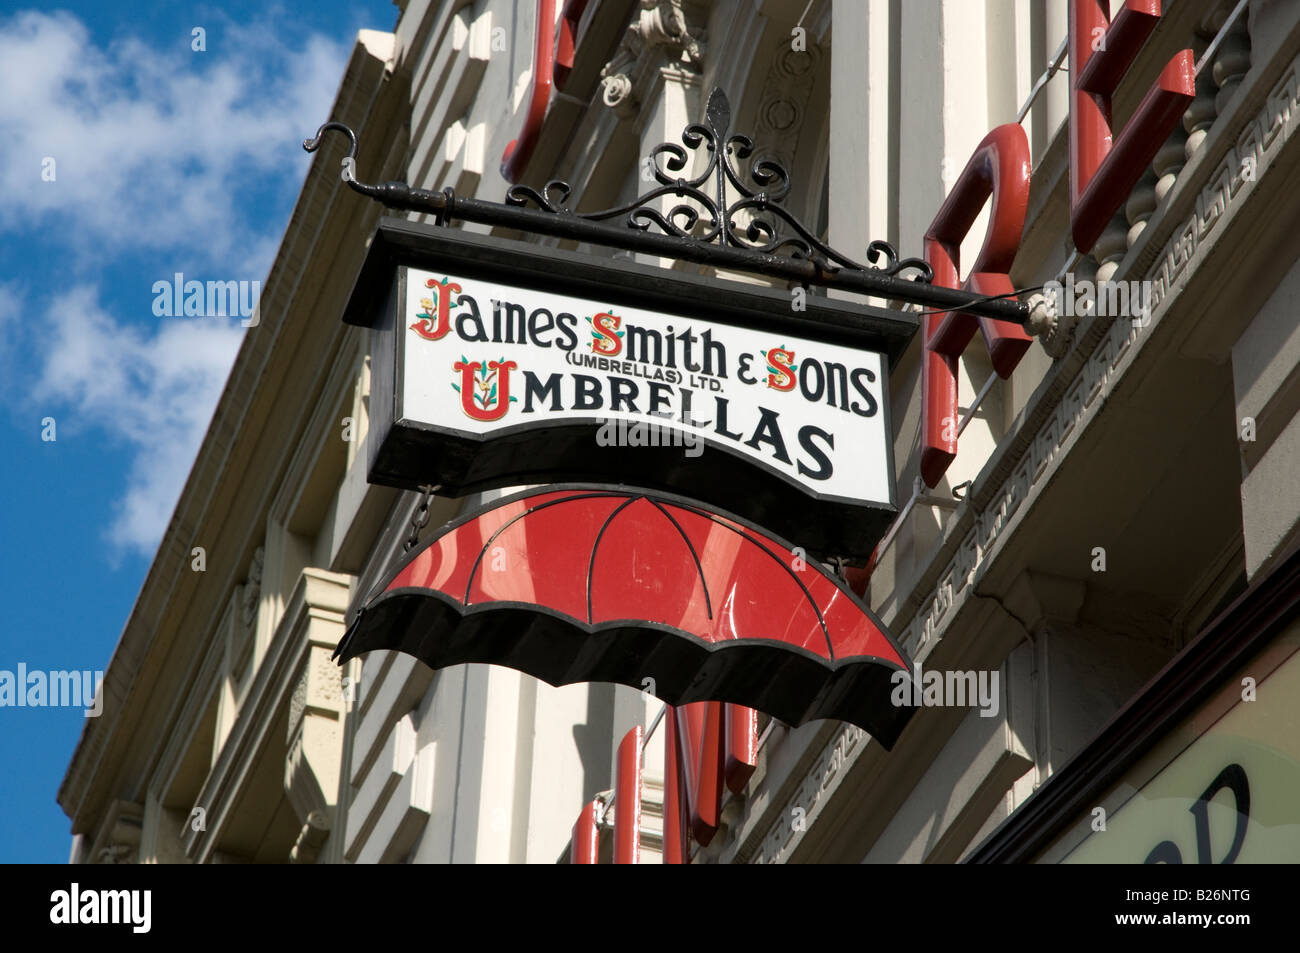 James Smith and Sons, Sombrillas, Londres, Inglaterra Foto de stock